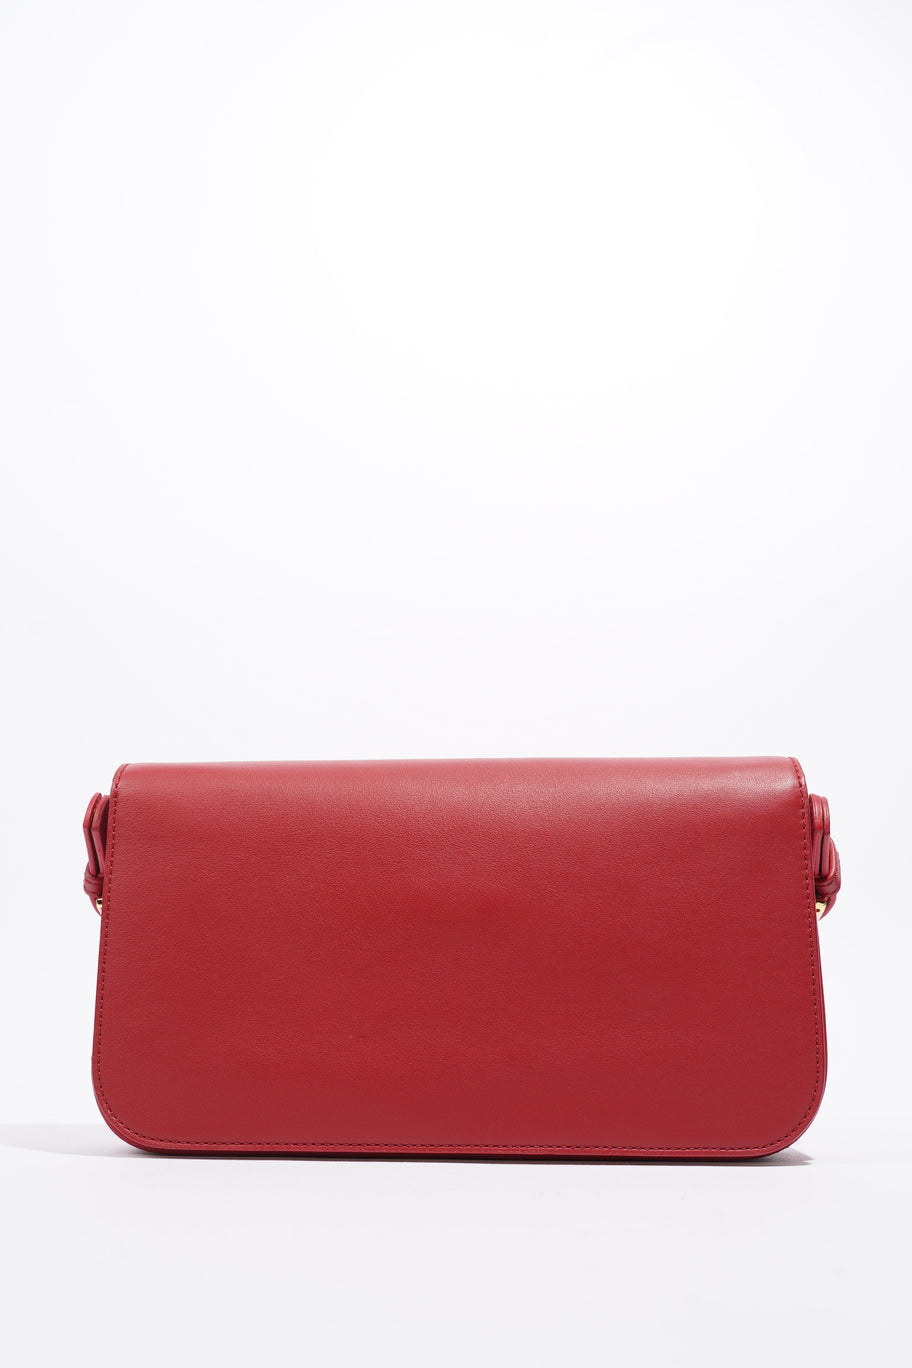 Baguette Bag Red Leather Image 5